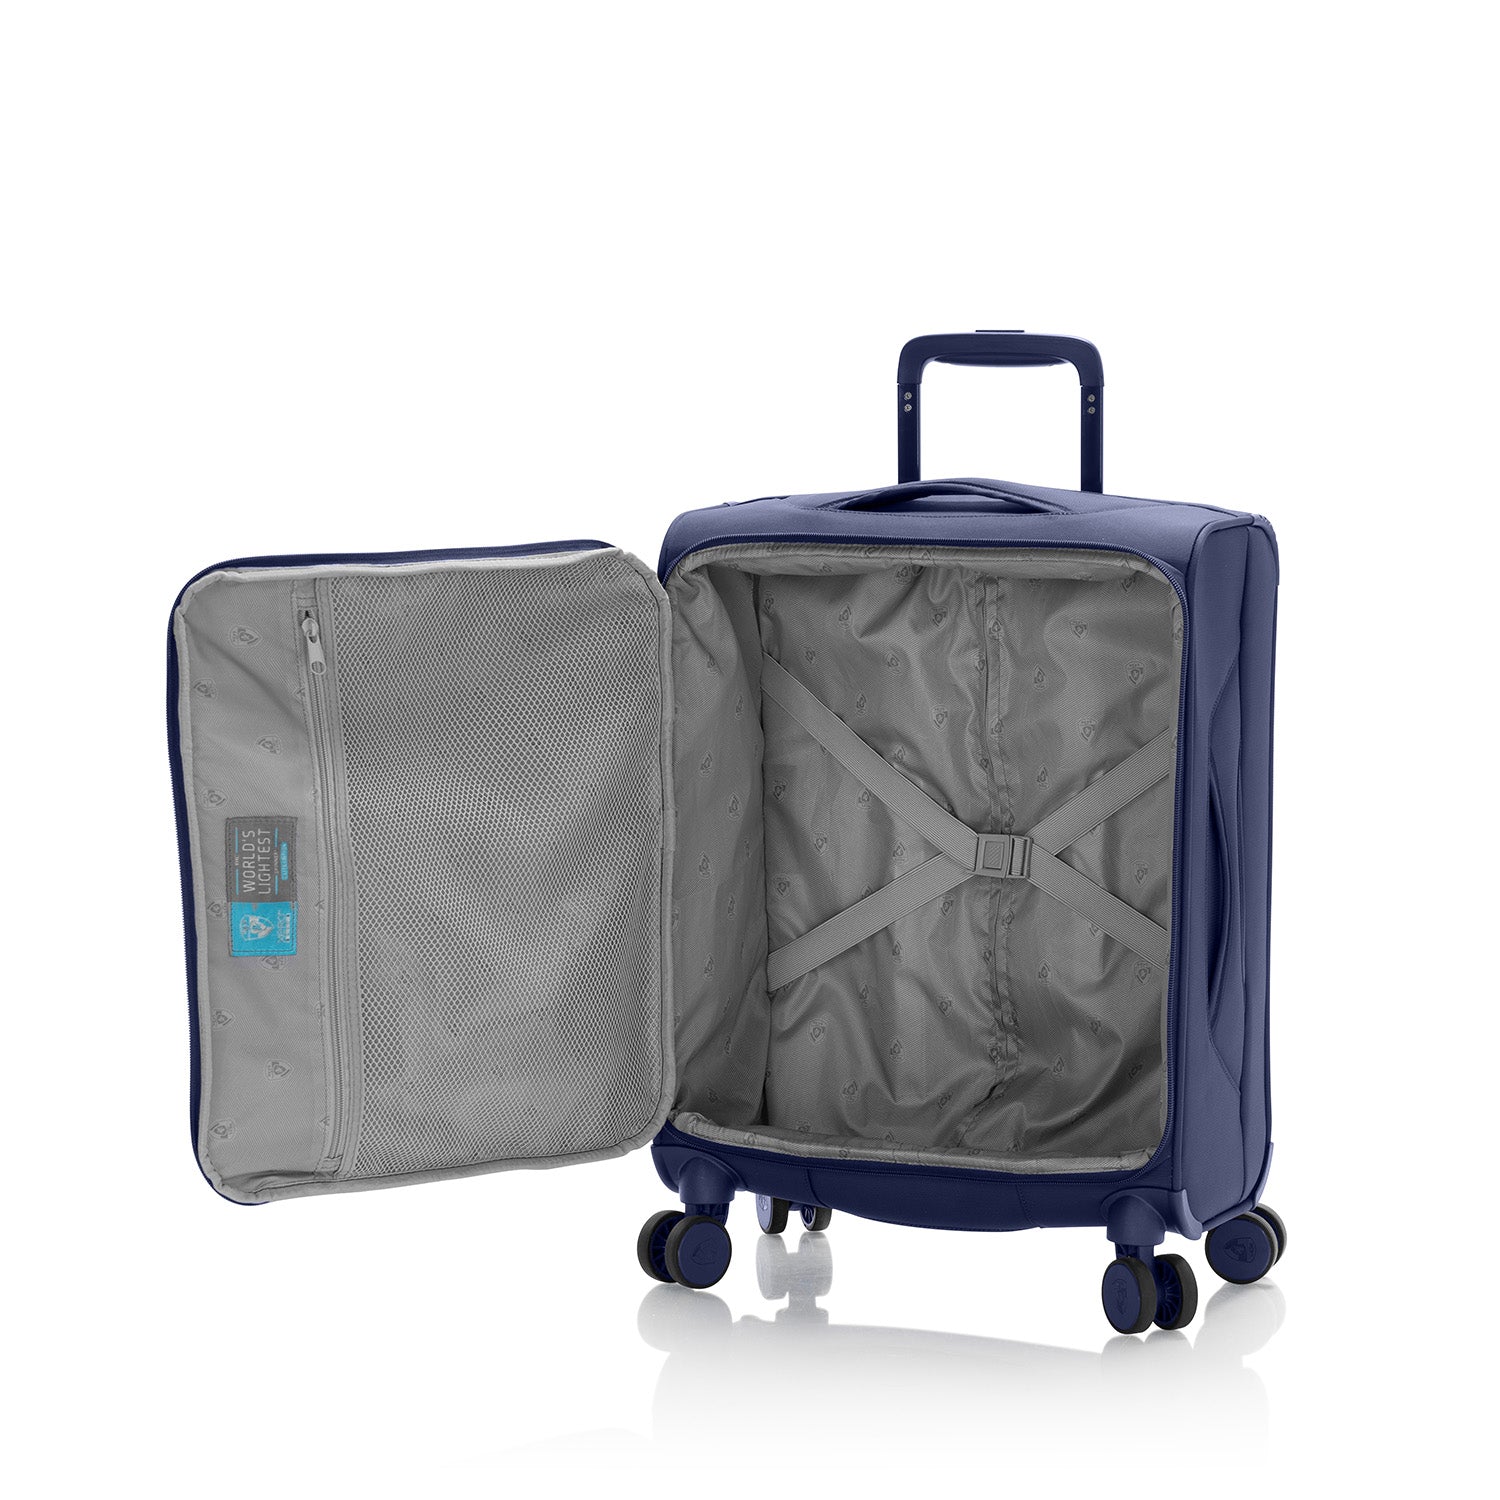 Xero Elite 2.0 21 Carry on Luggage | World's Lightest Luggage